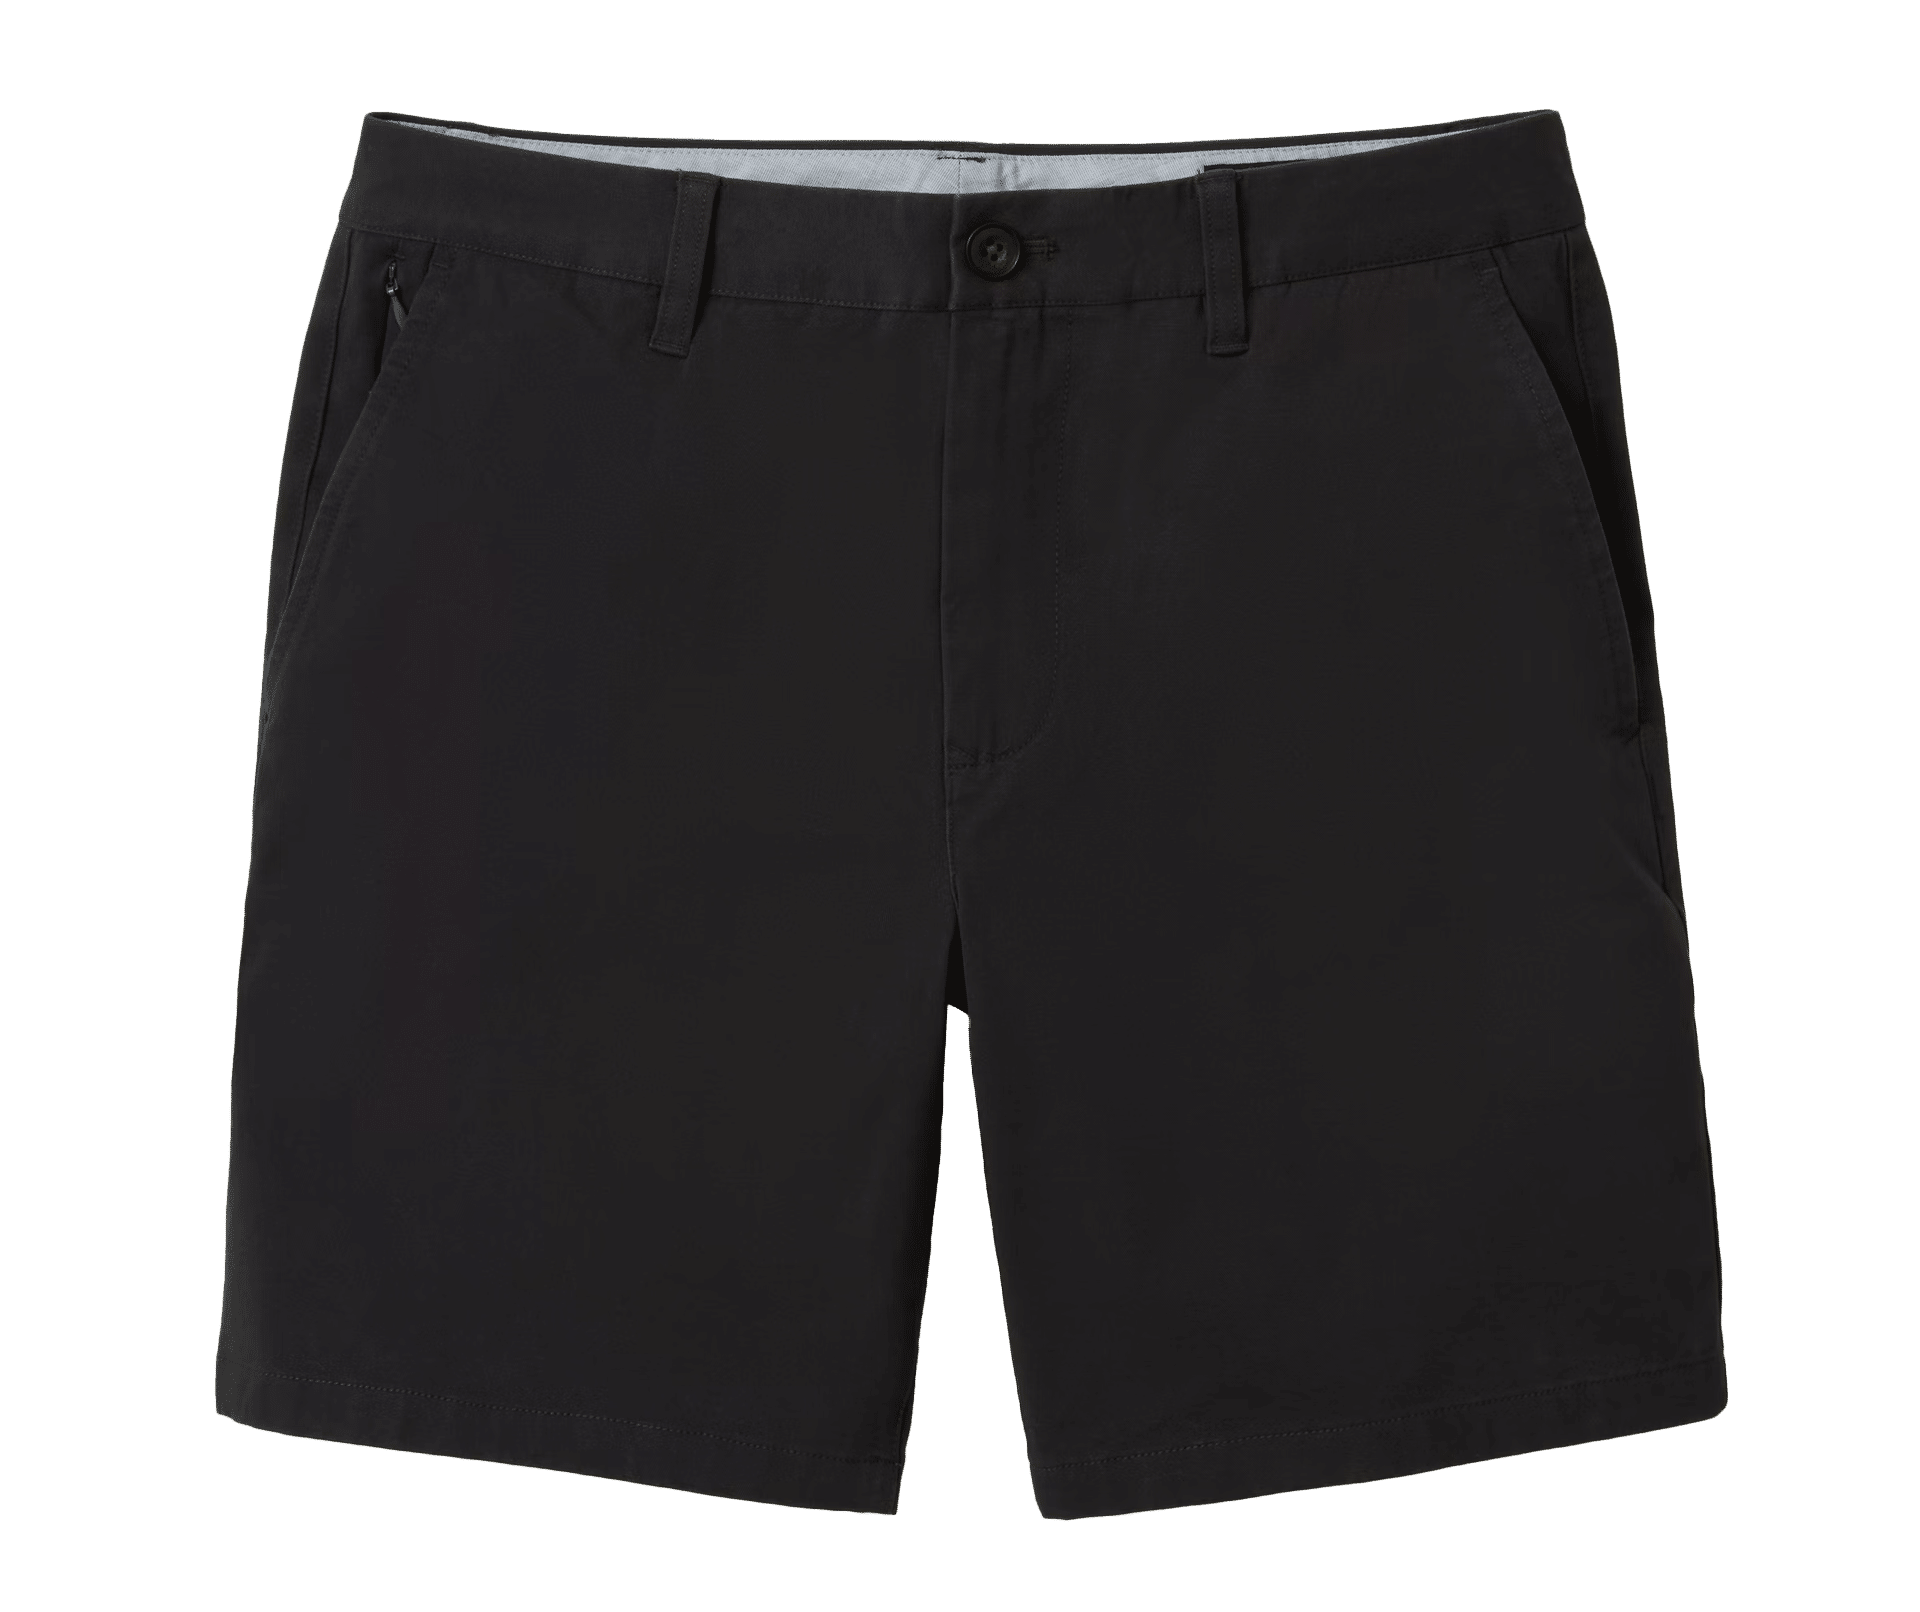 Bonobos shorts